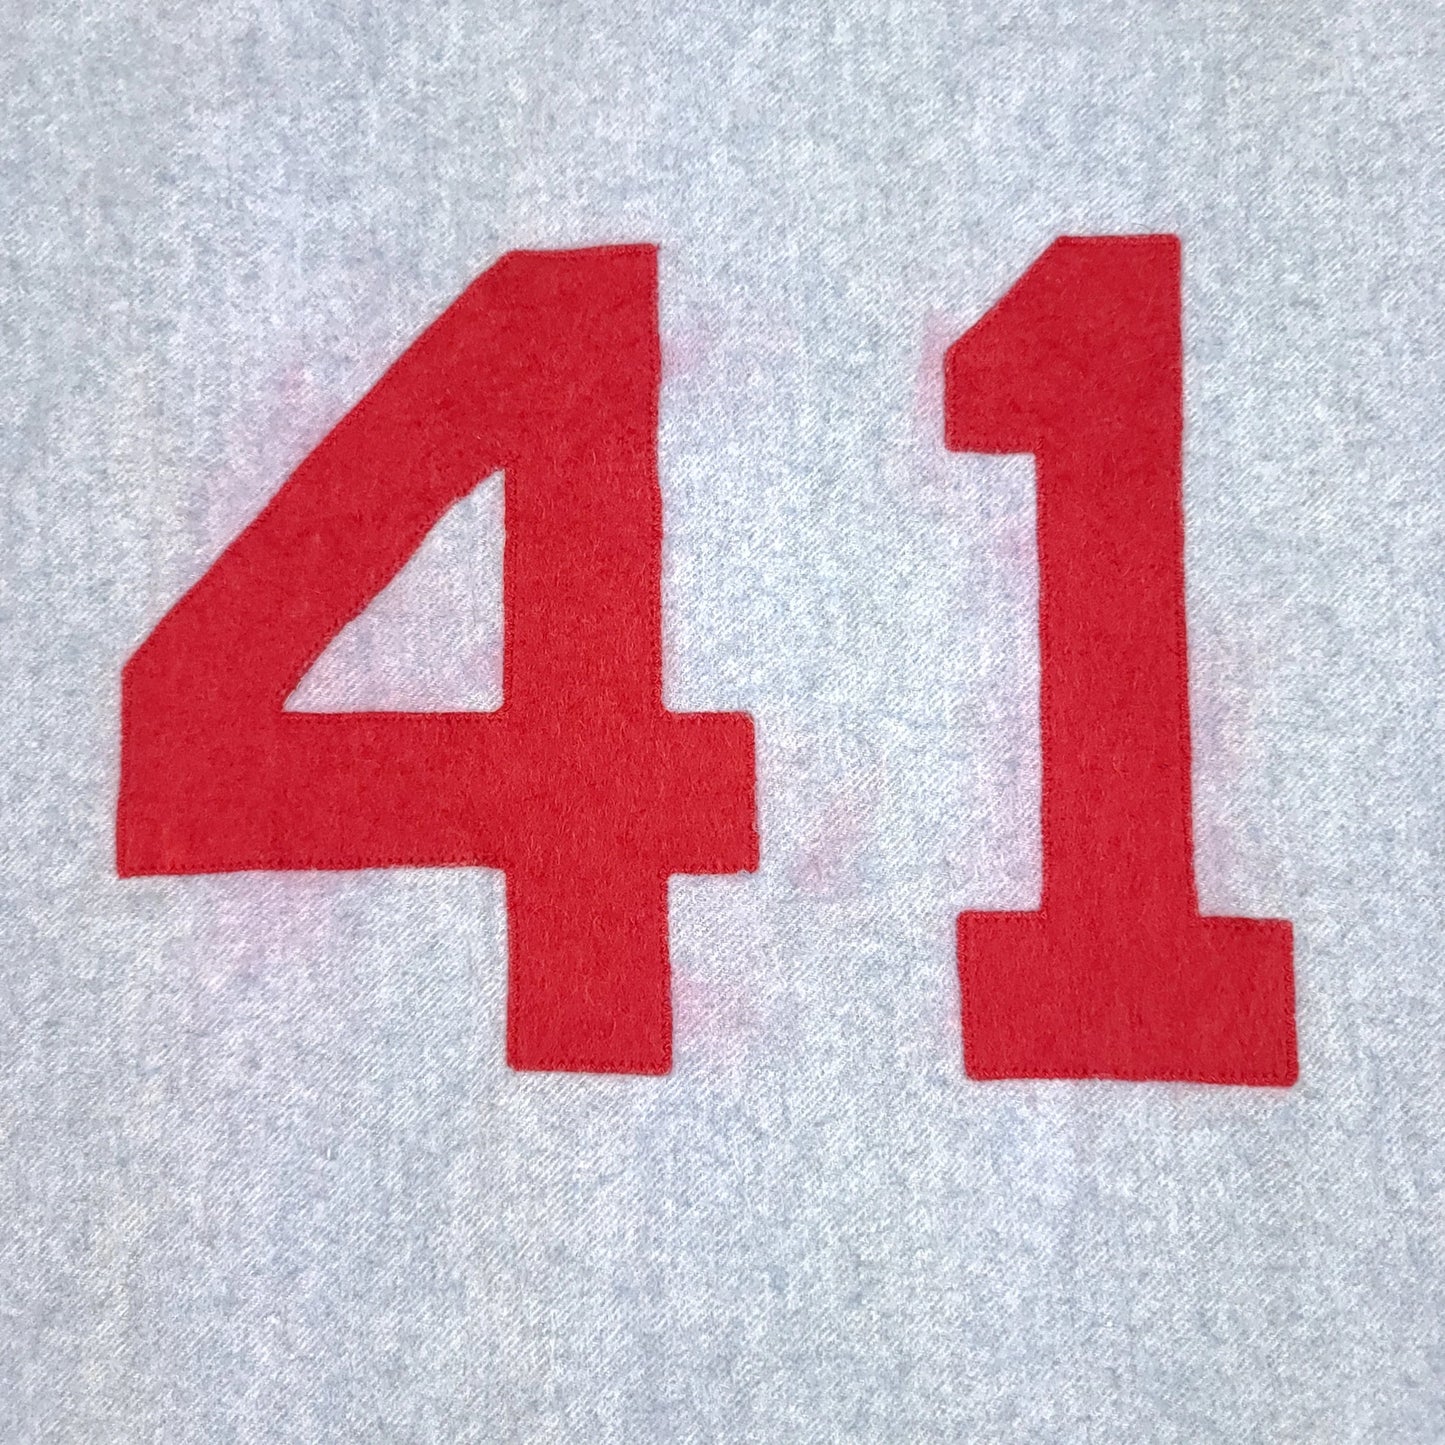 Eddie Mathews #41 Atlanta Braves Gray Baseball Jersey